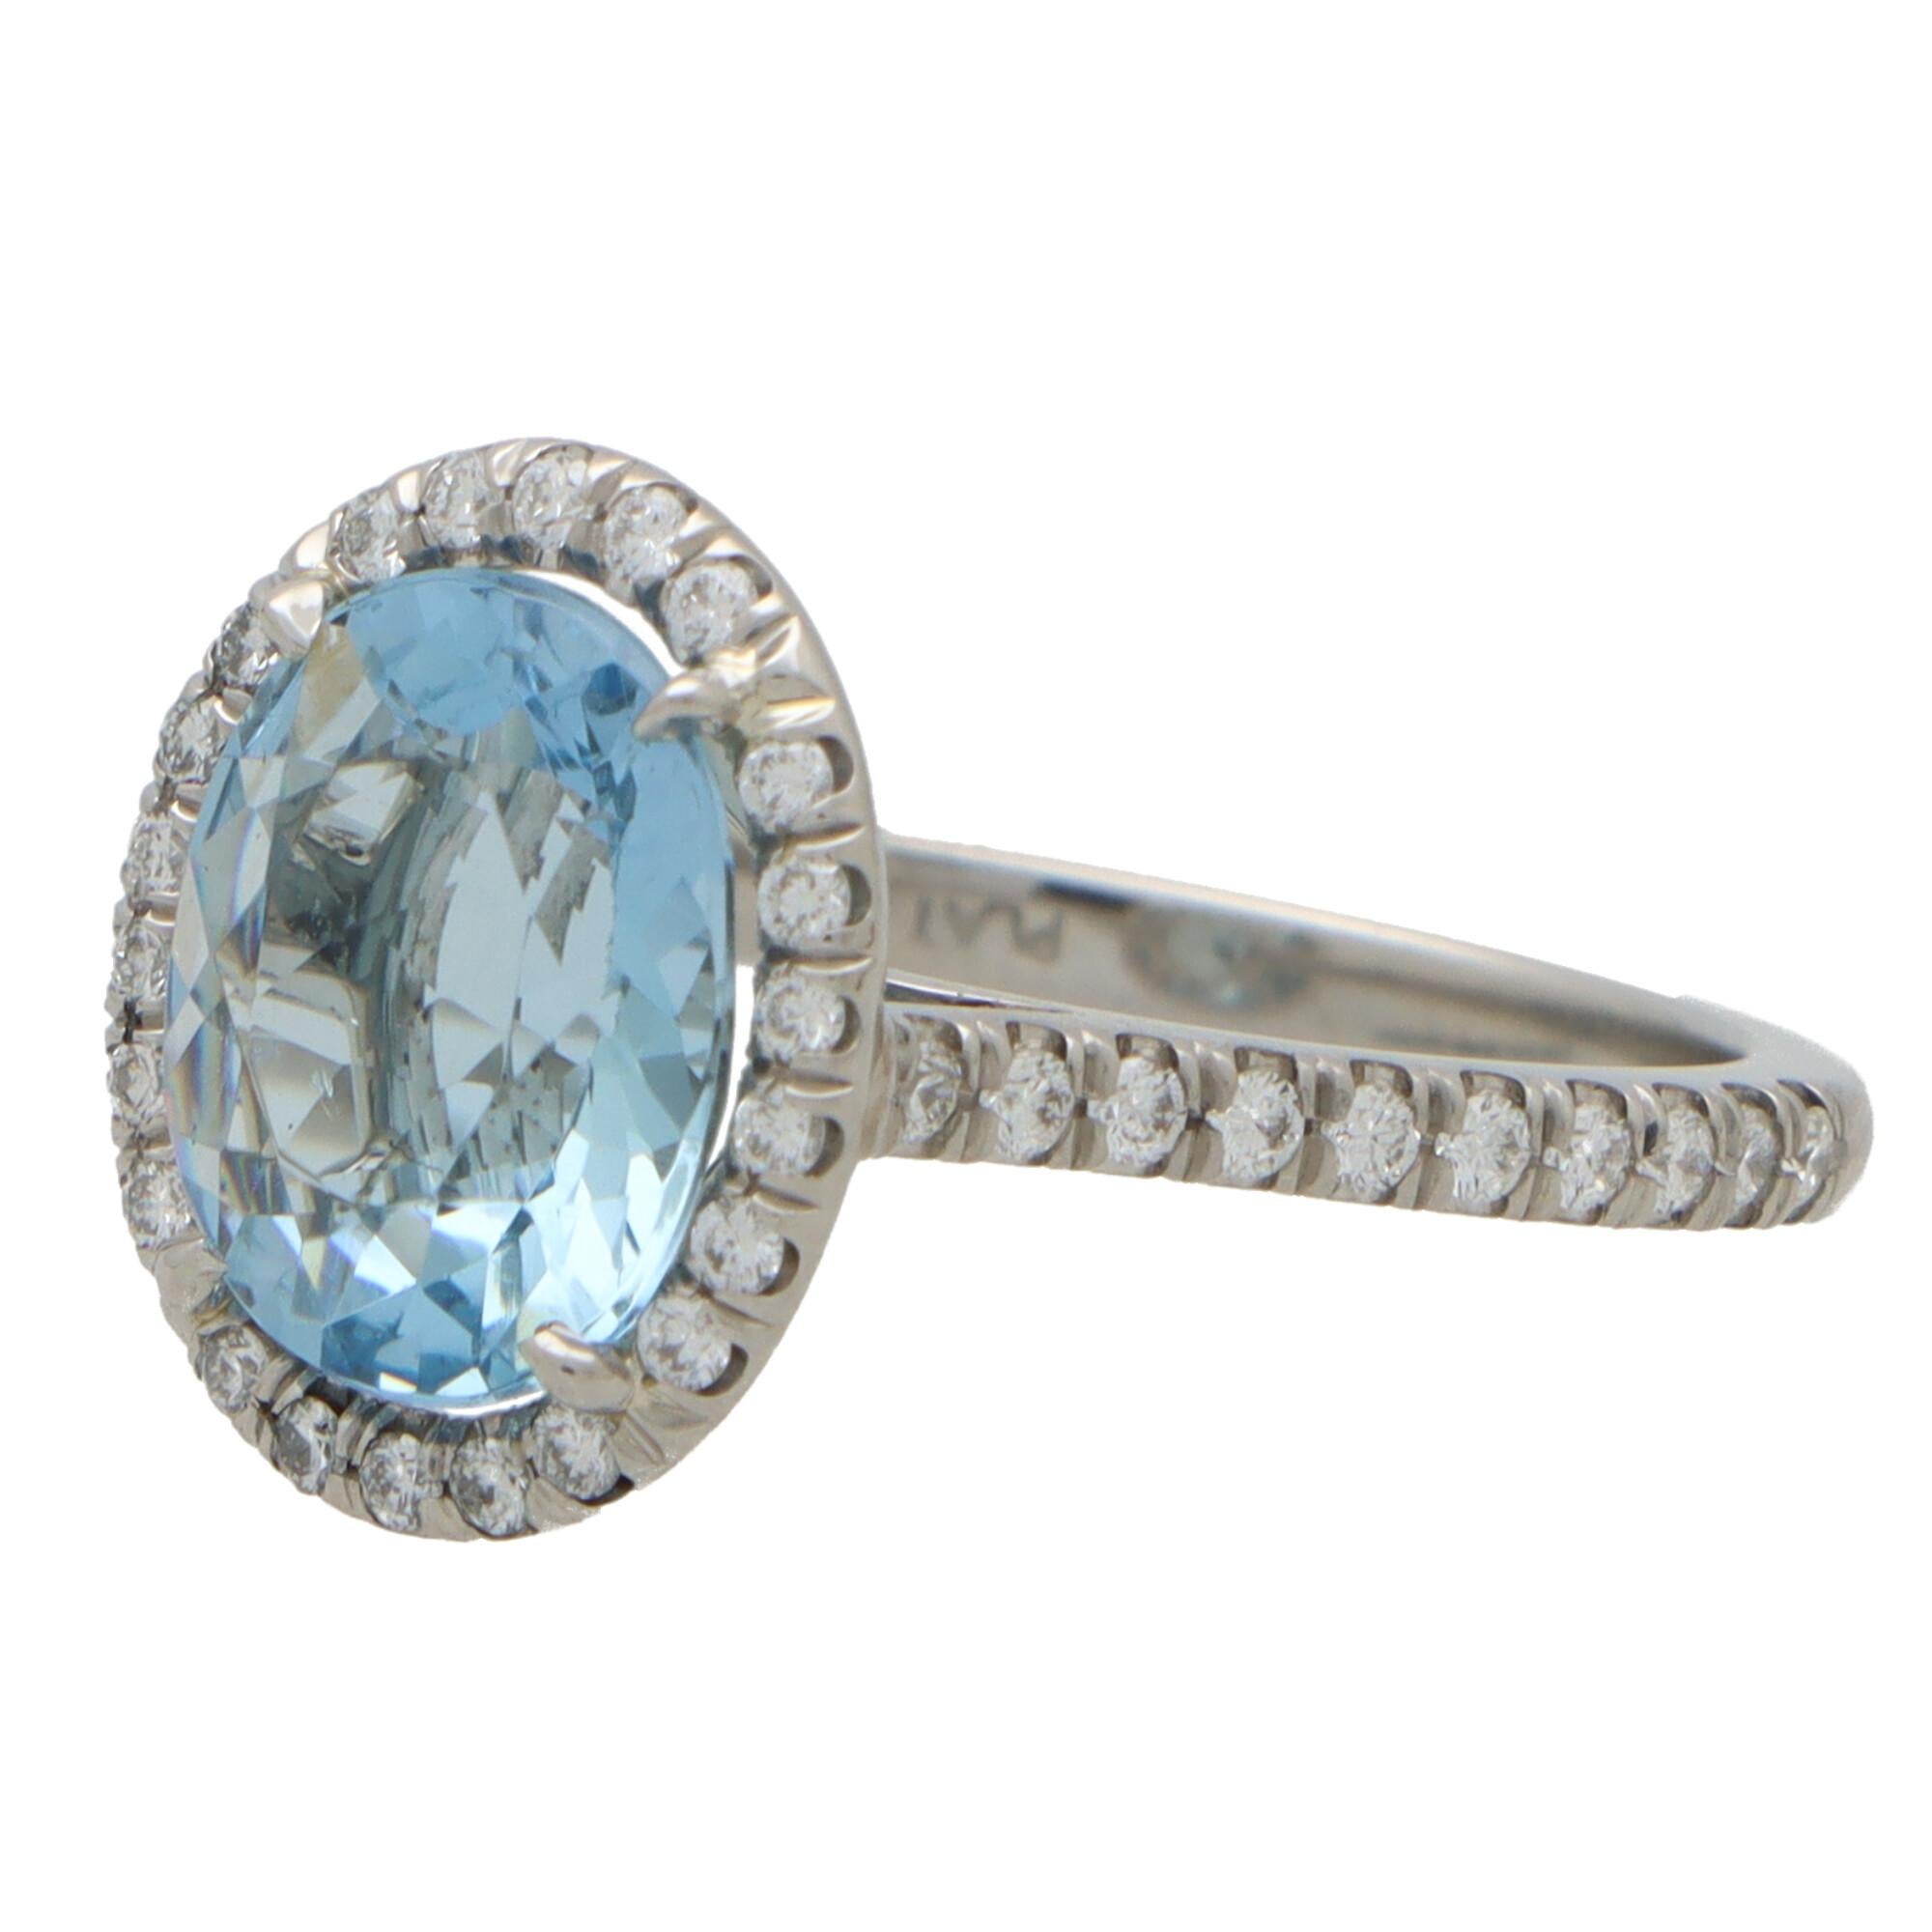 Oval Cut Aquamarine and Diamond Halo Ring in Platinum